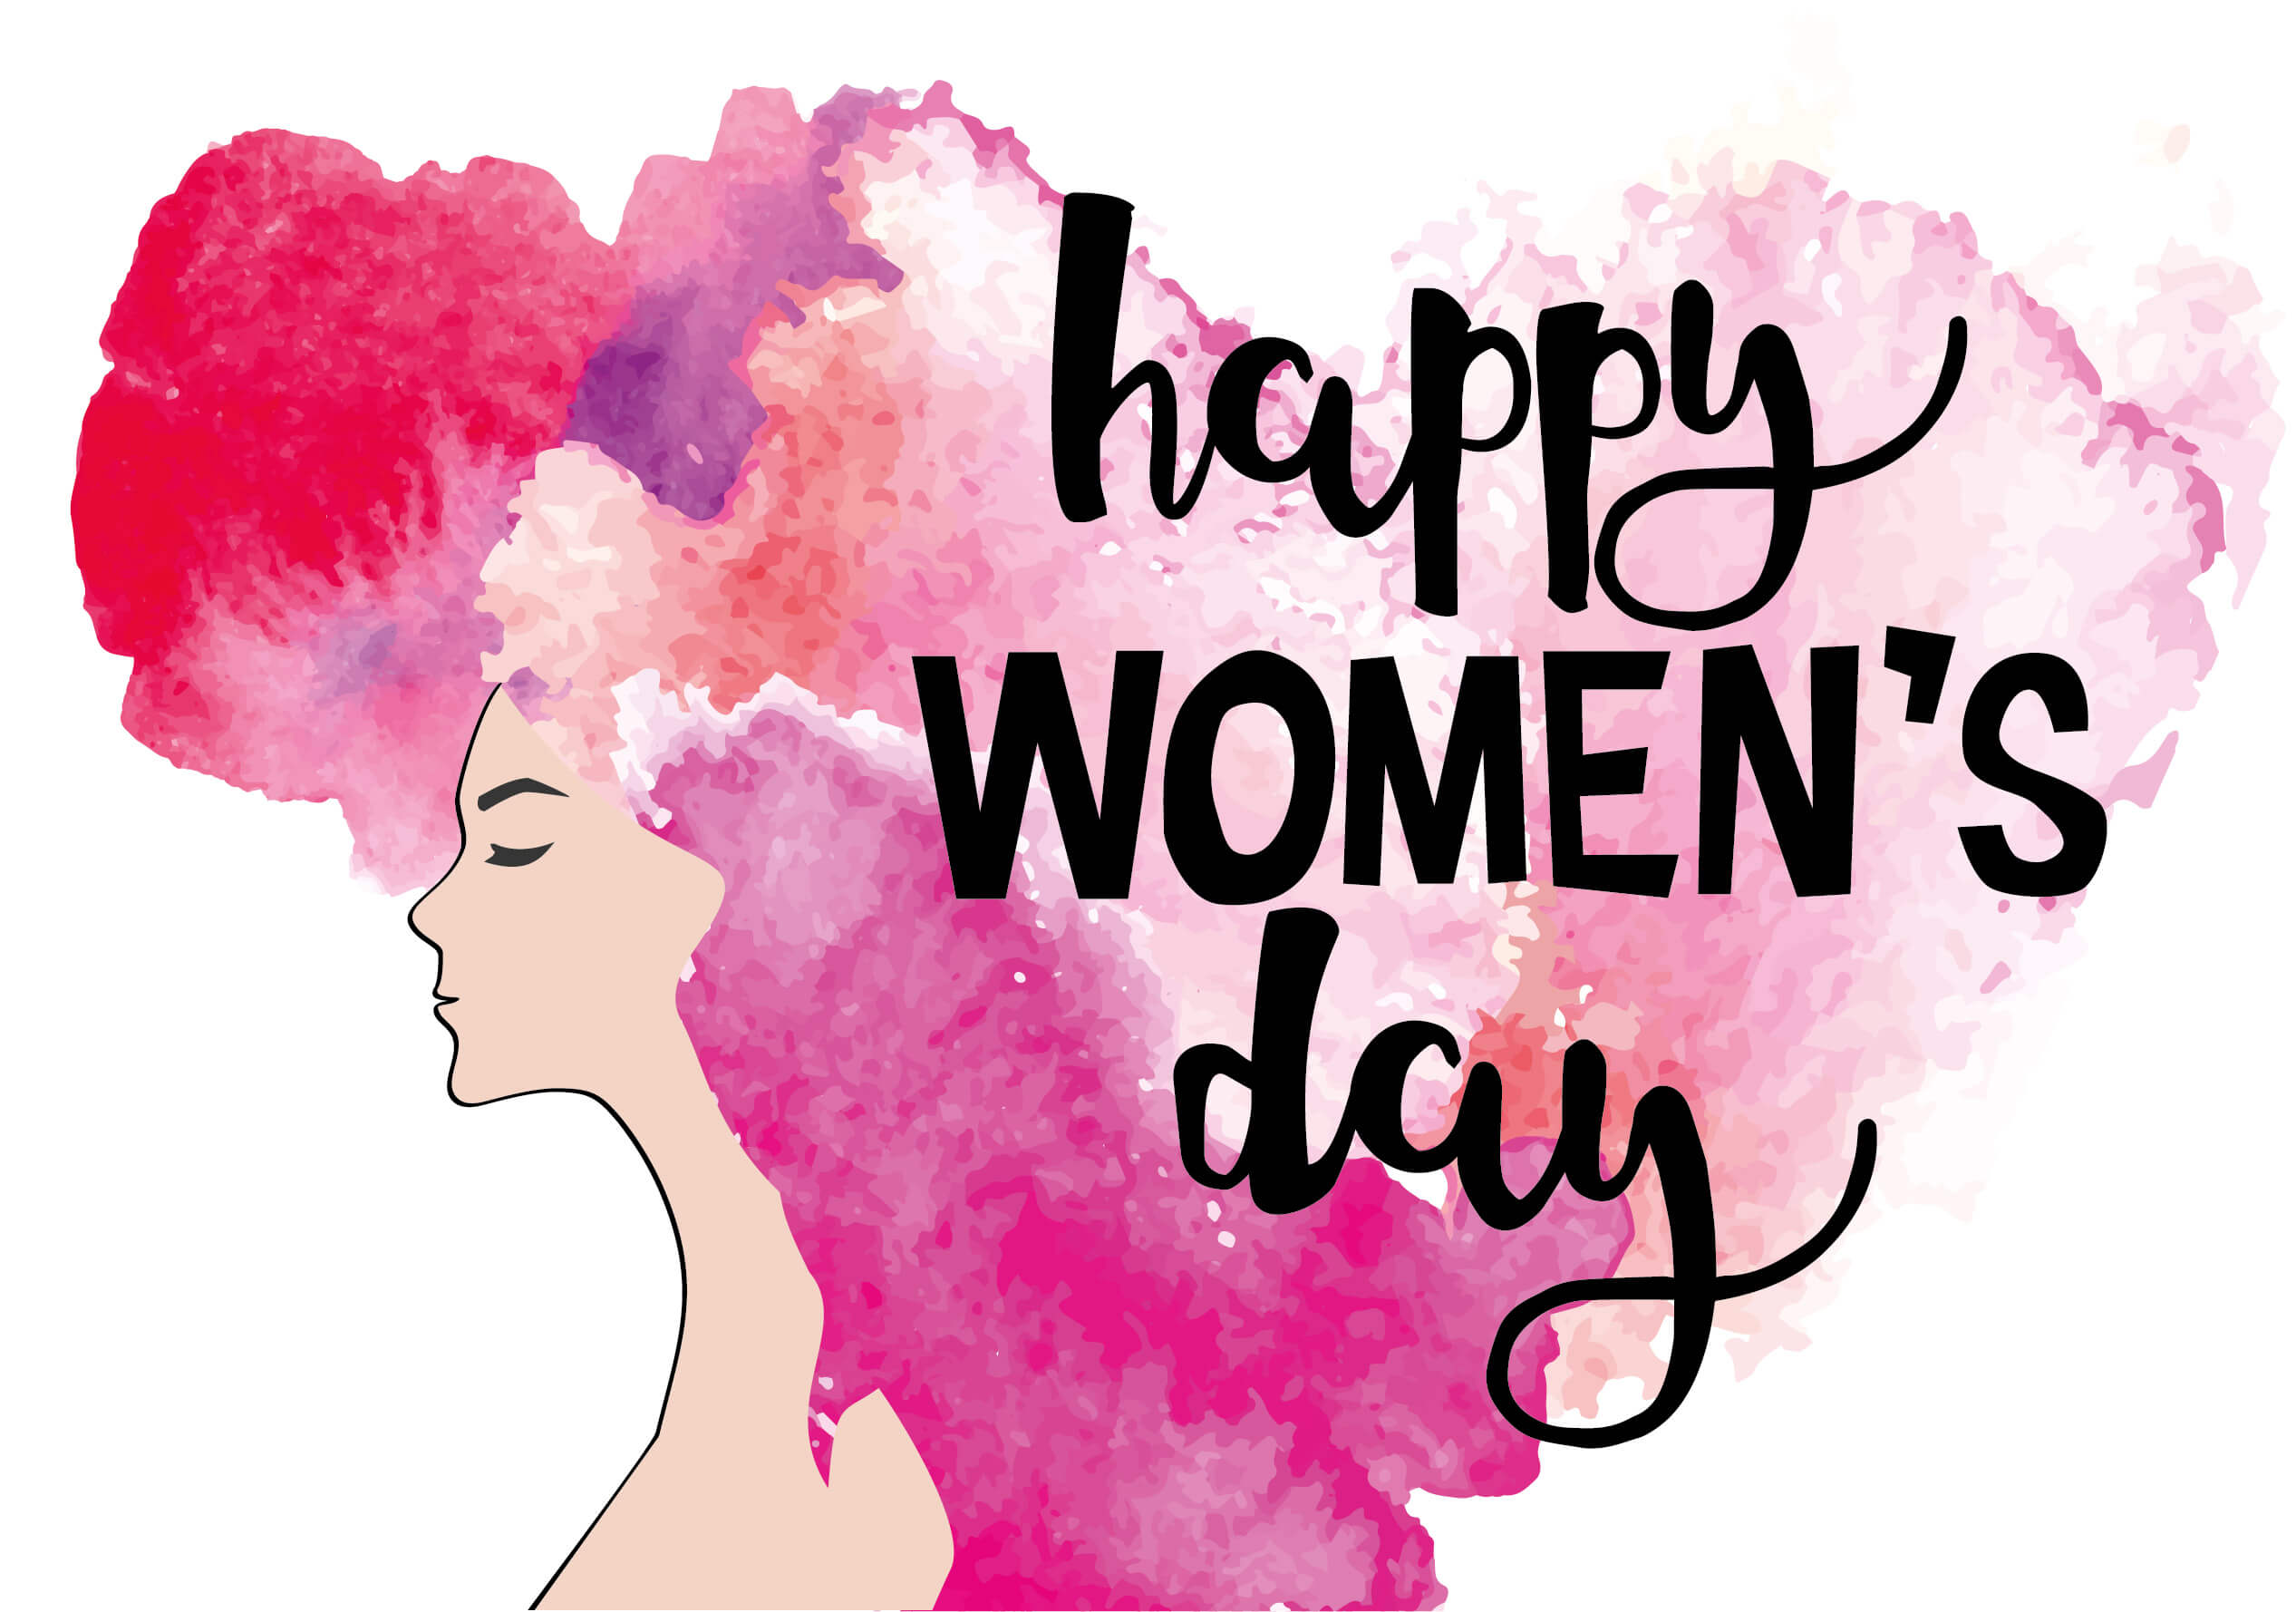 روز جهانی زن